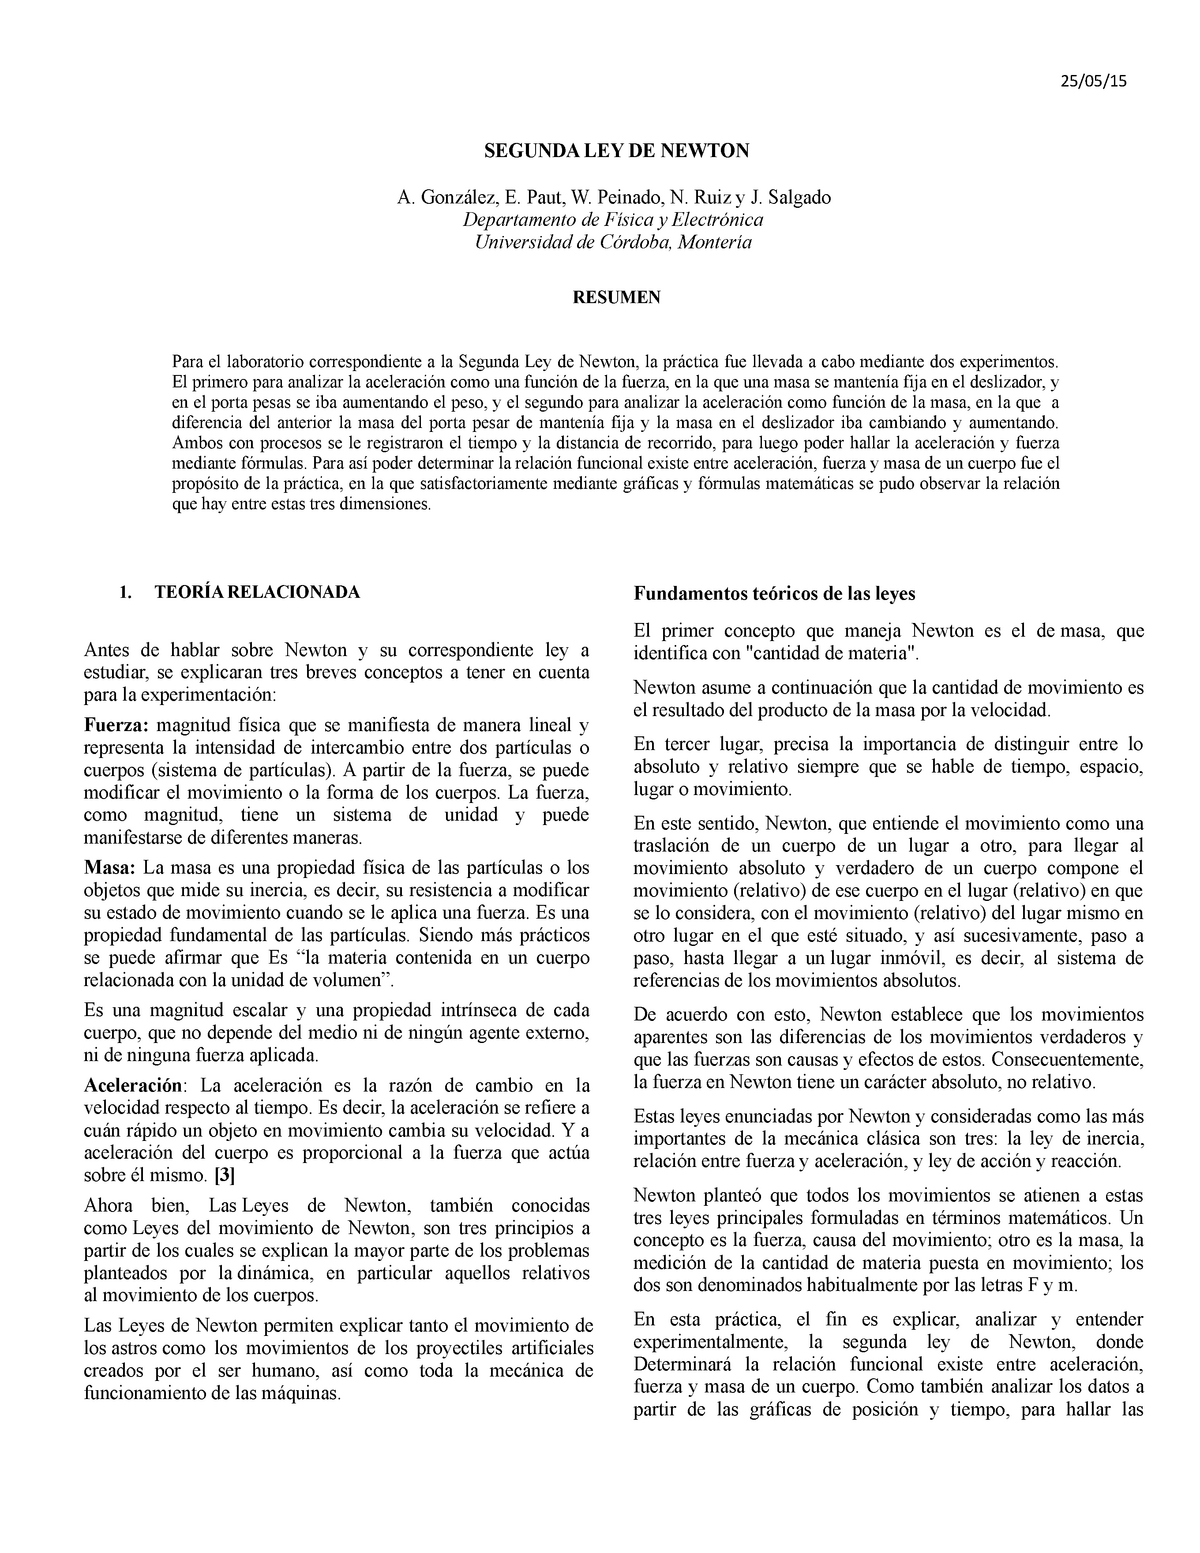 364886263 Informe Segunda Ley de Newton - SEGUNDA LEY DE NEWTON A. E. Paut,  W. Peinado, N. Ruiz y J. - Studocu